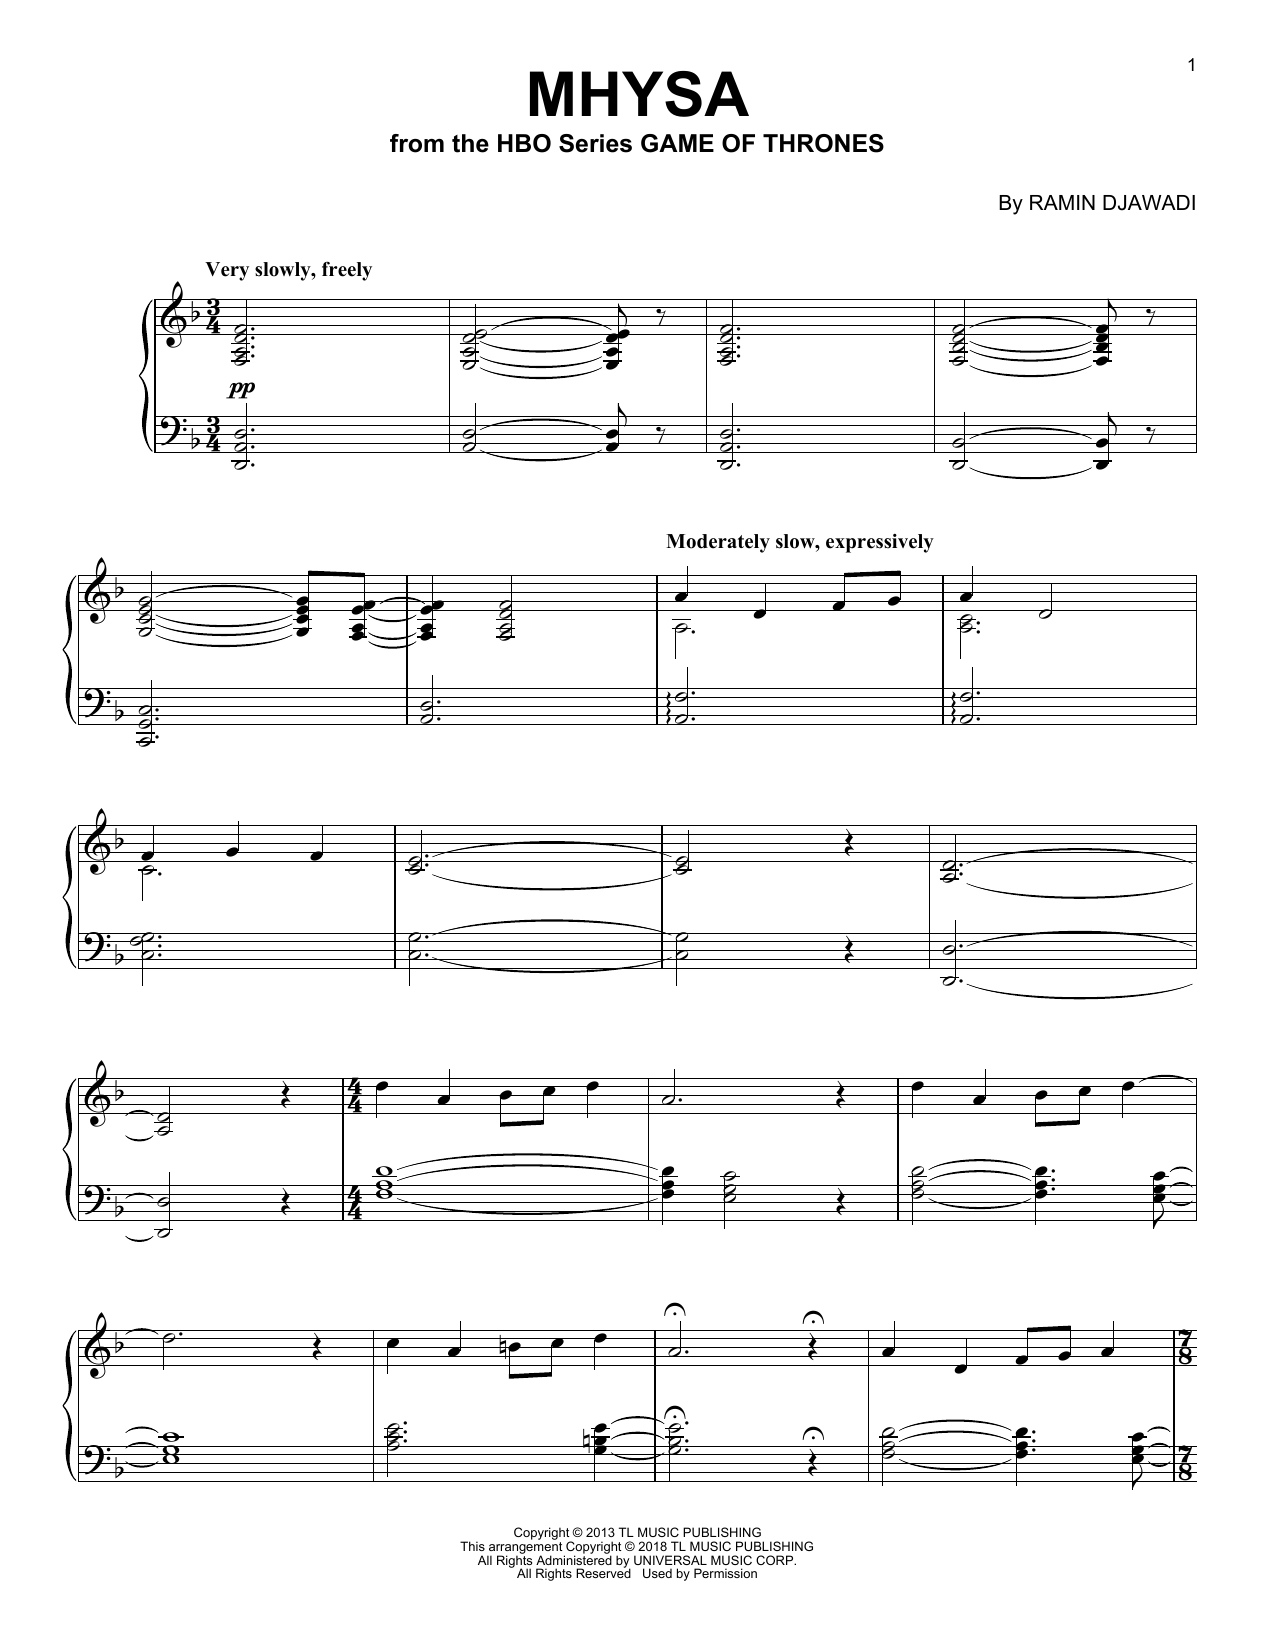 Download Ramin Djawadi Mhysa Sheet Music and learn how to play Piano PDF digital score in minutes